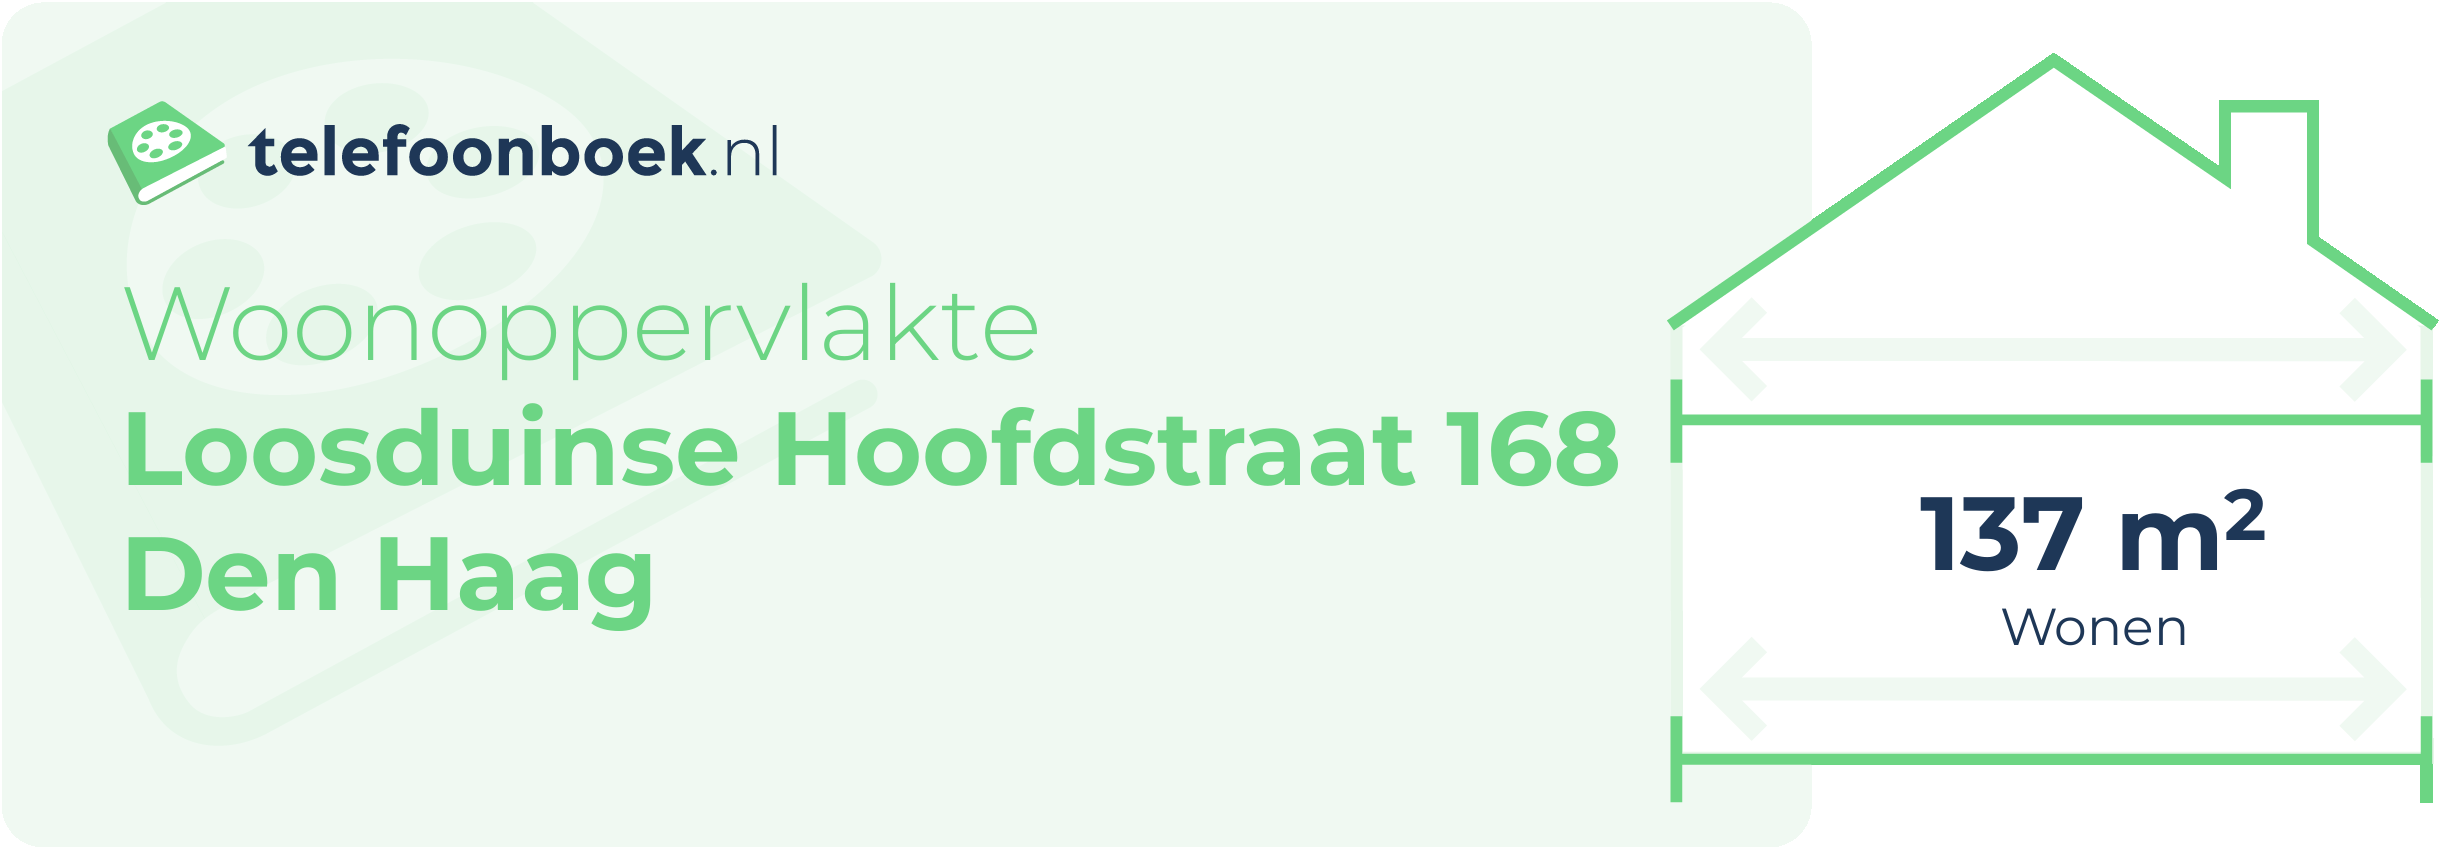 Woonoppervlakte Loosduinse Hoofdstraat 168 Den Haag